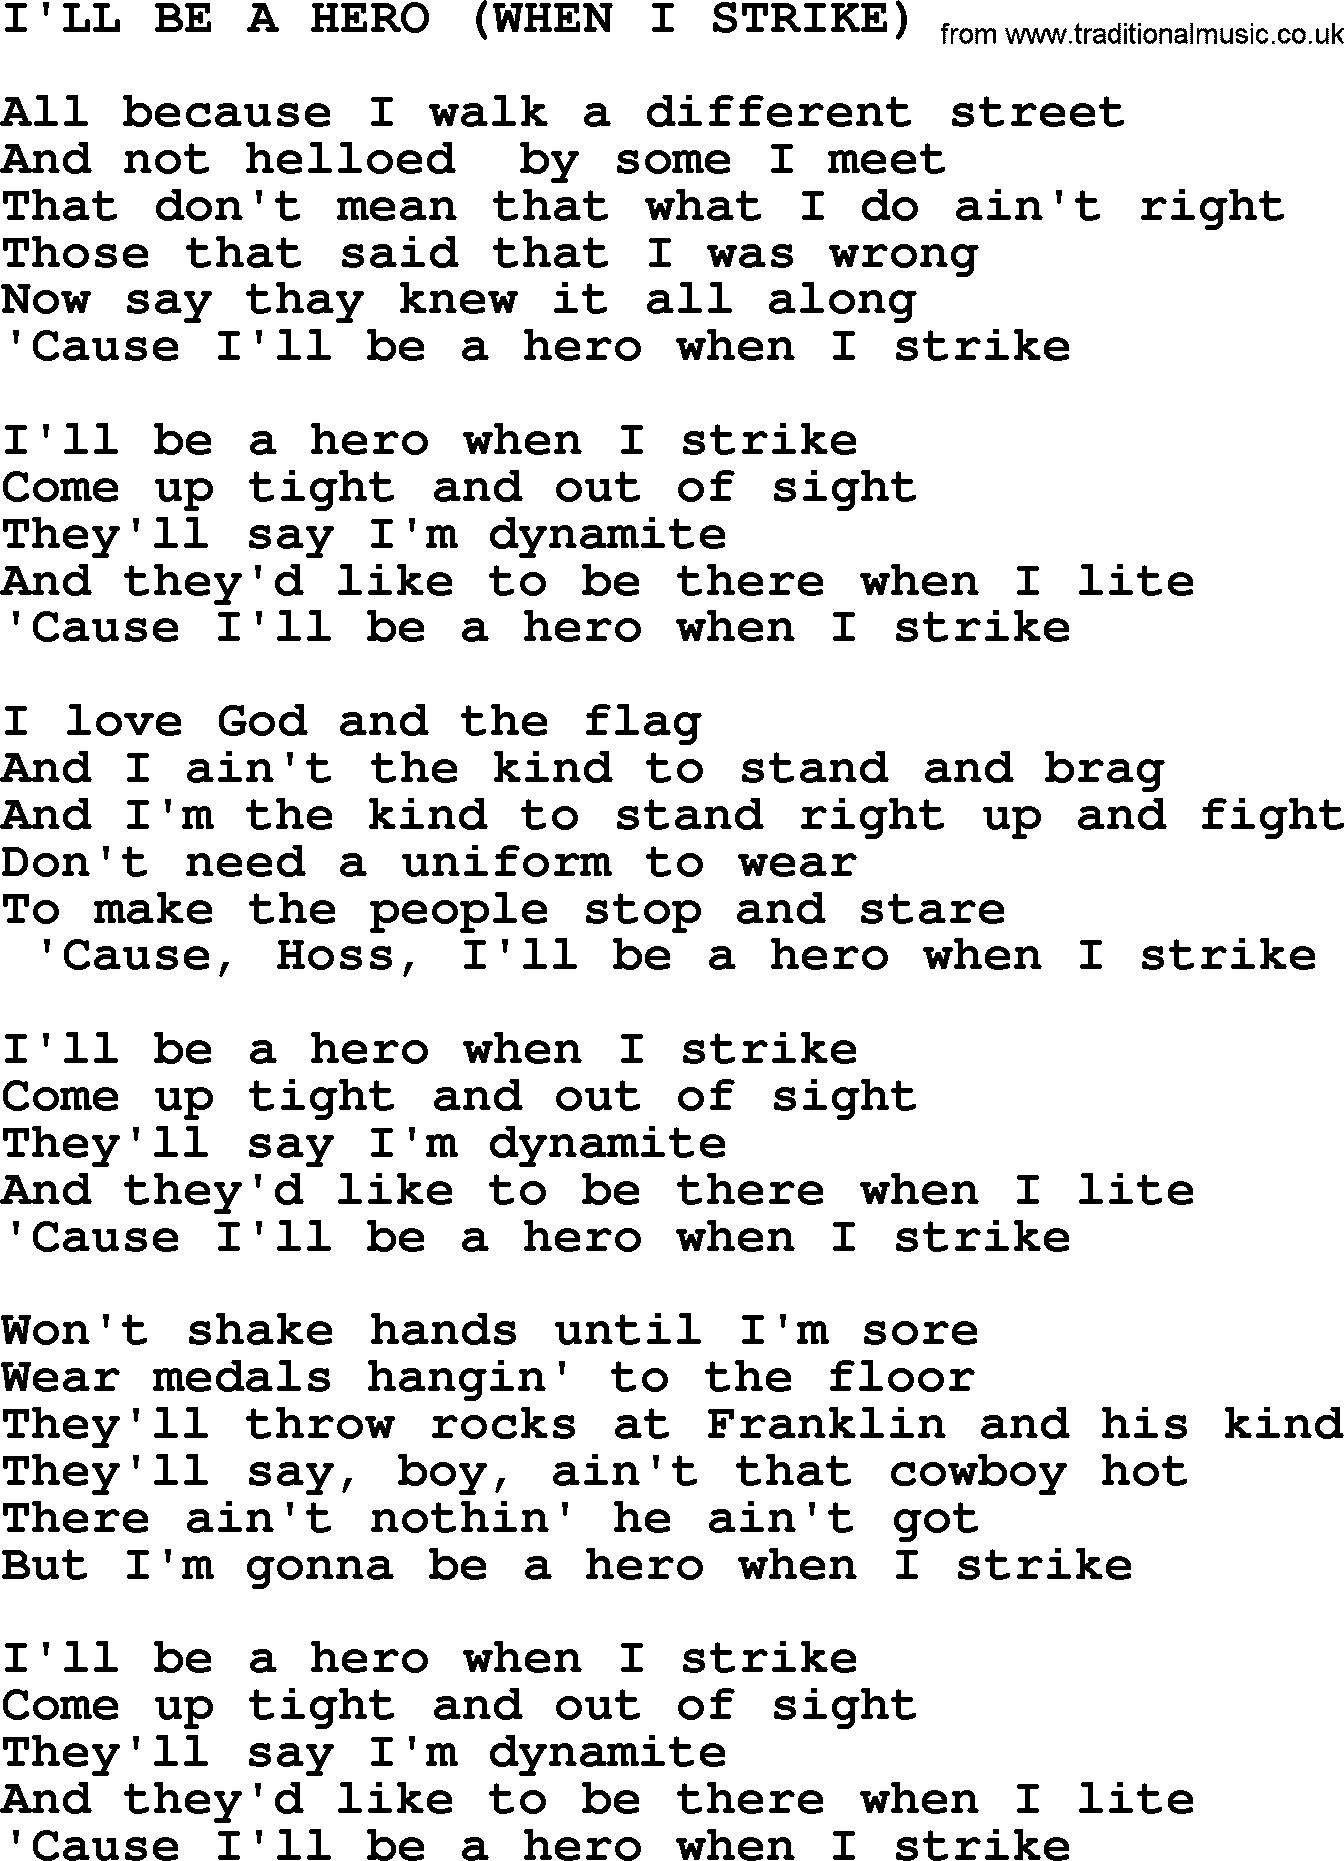 Merle Haggard song: I'll Be A Hero When I Strike, lyrics.